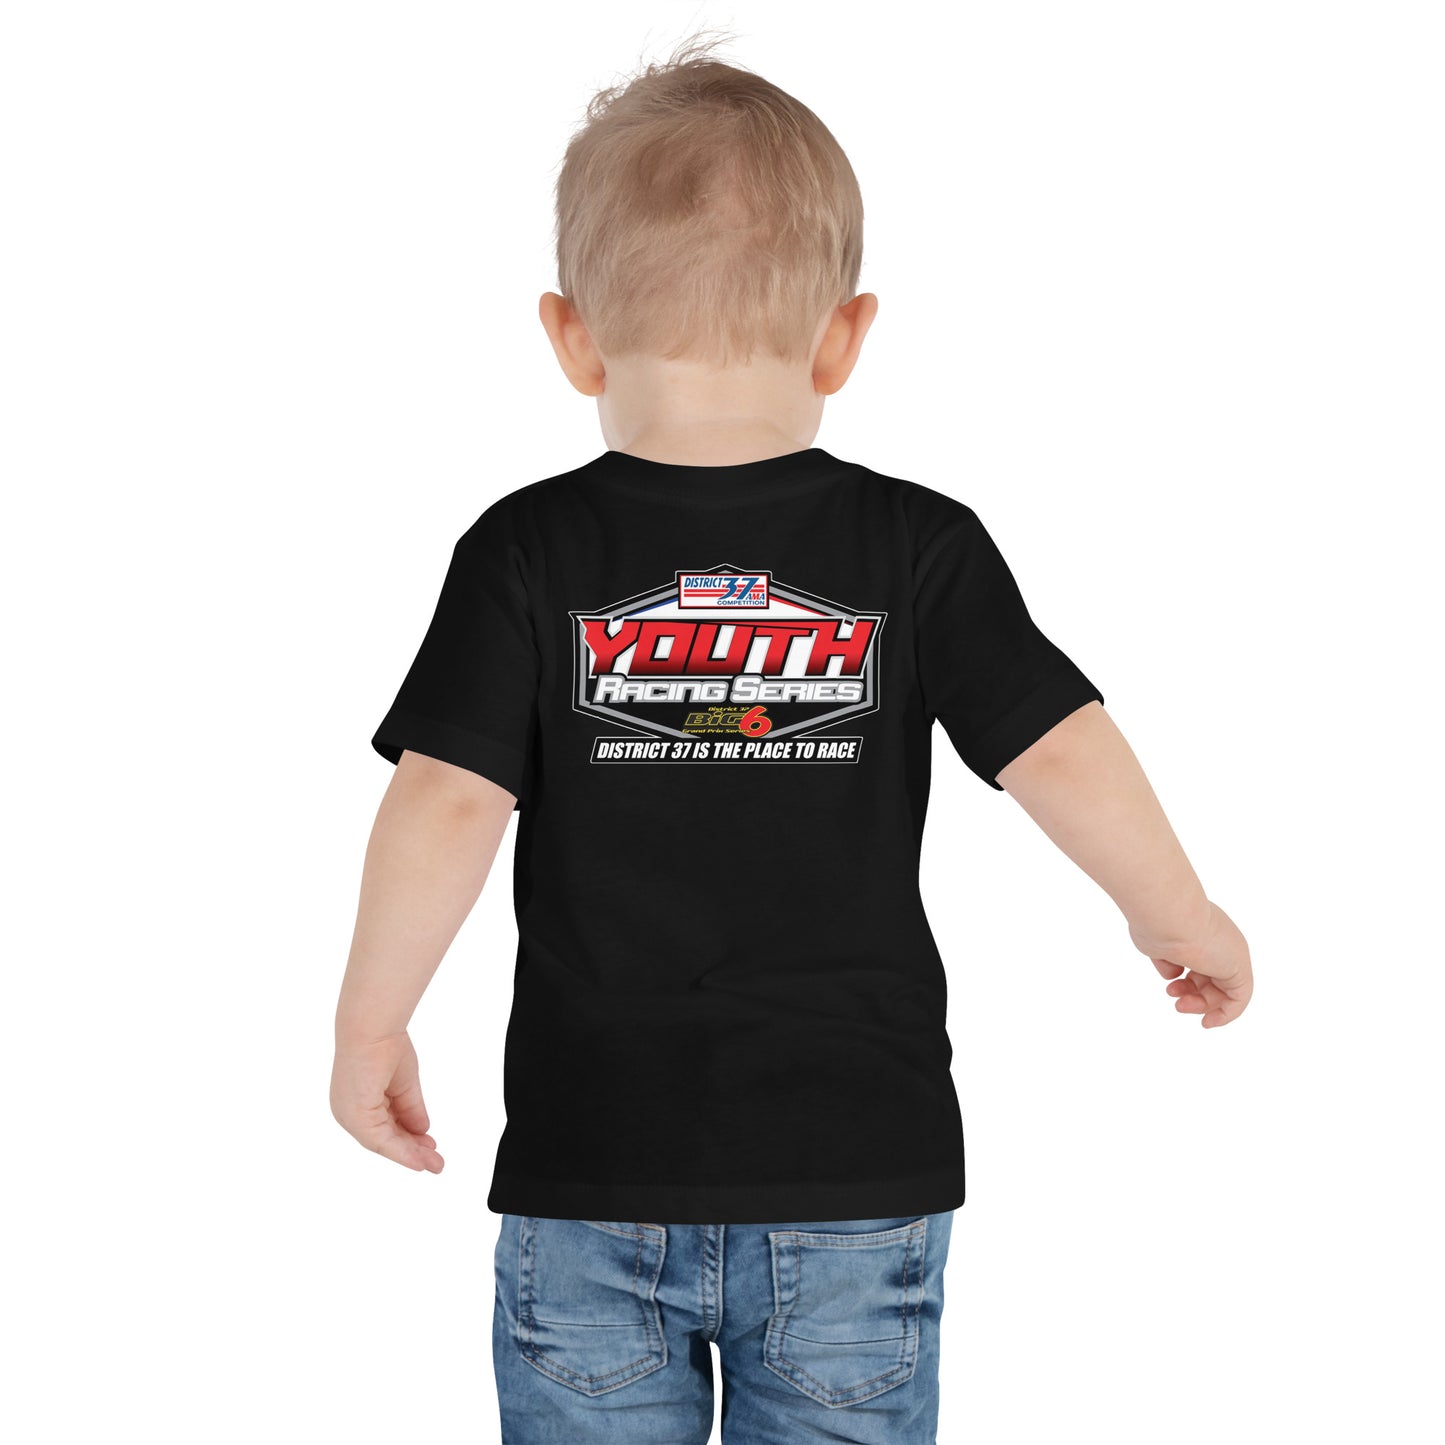 D37 Youth Series Shirt - Toddler Size Shirt